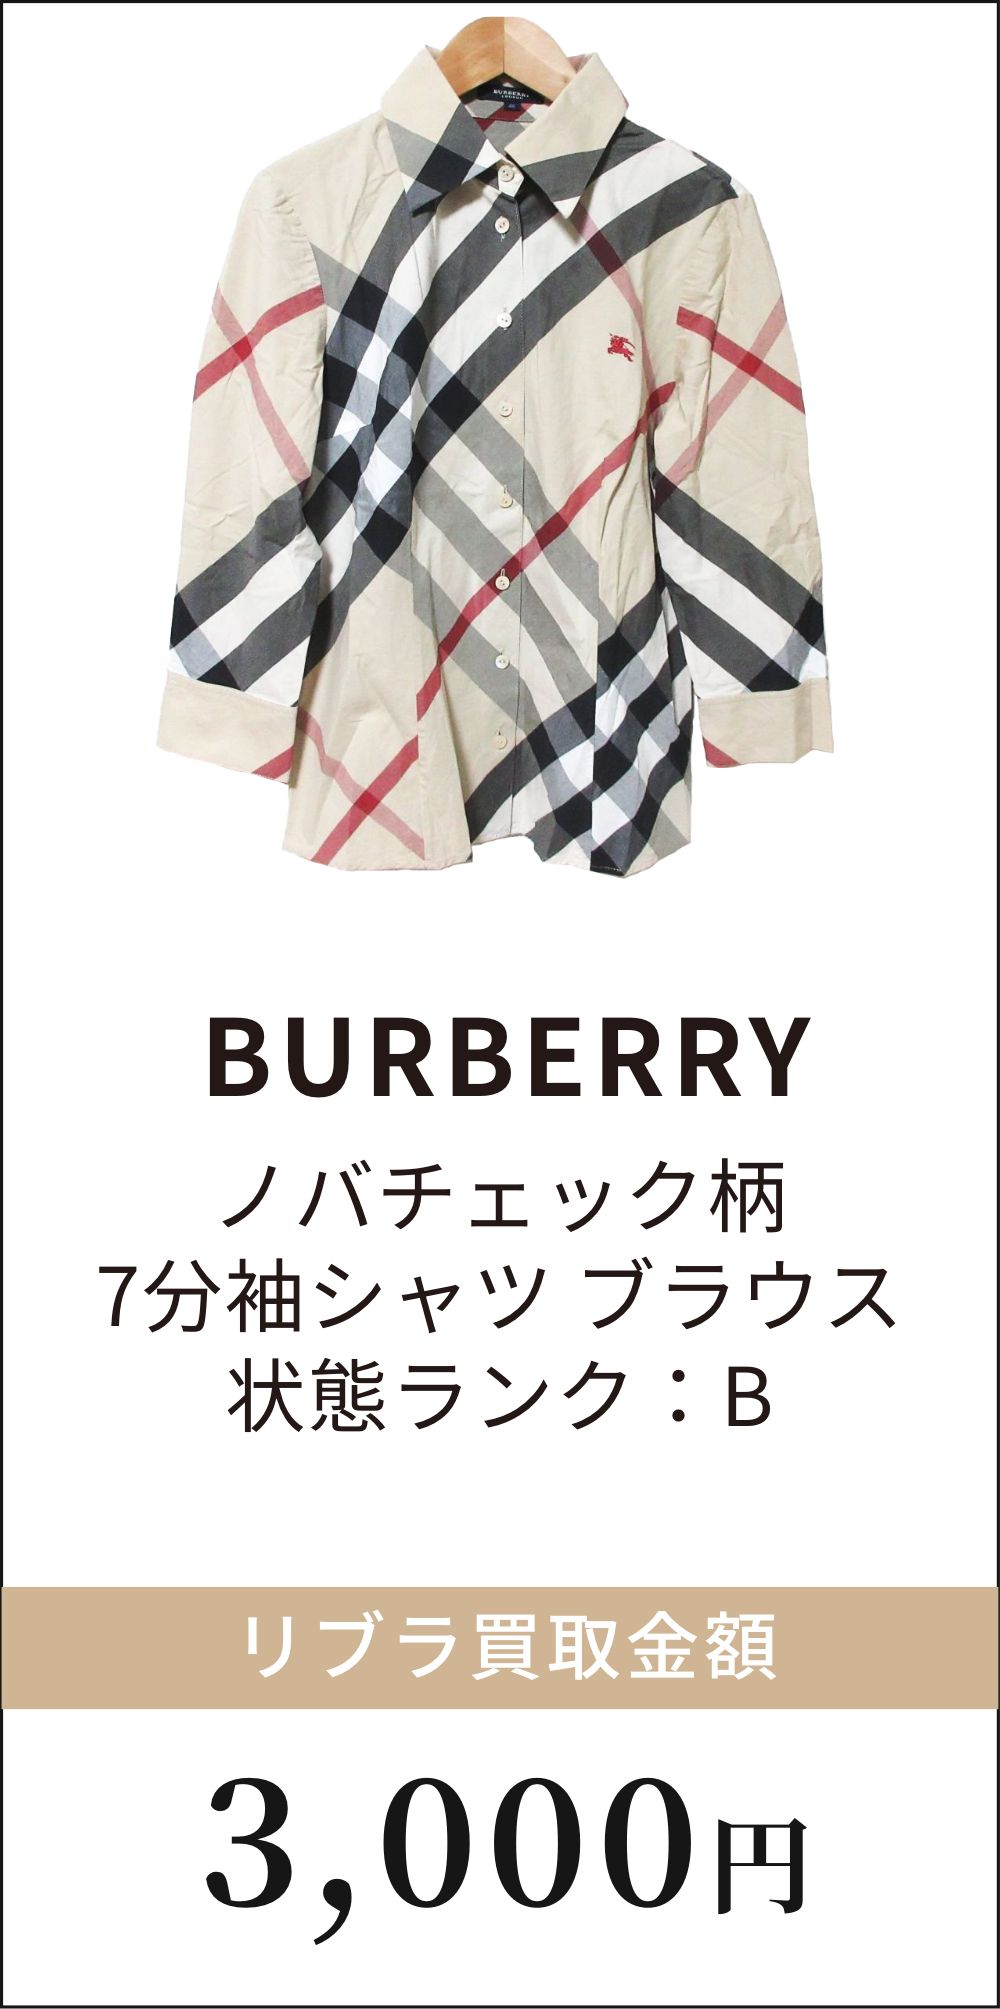 BURBERRY（バーバリー）洋服の高価買取ならリブラ宅配買取